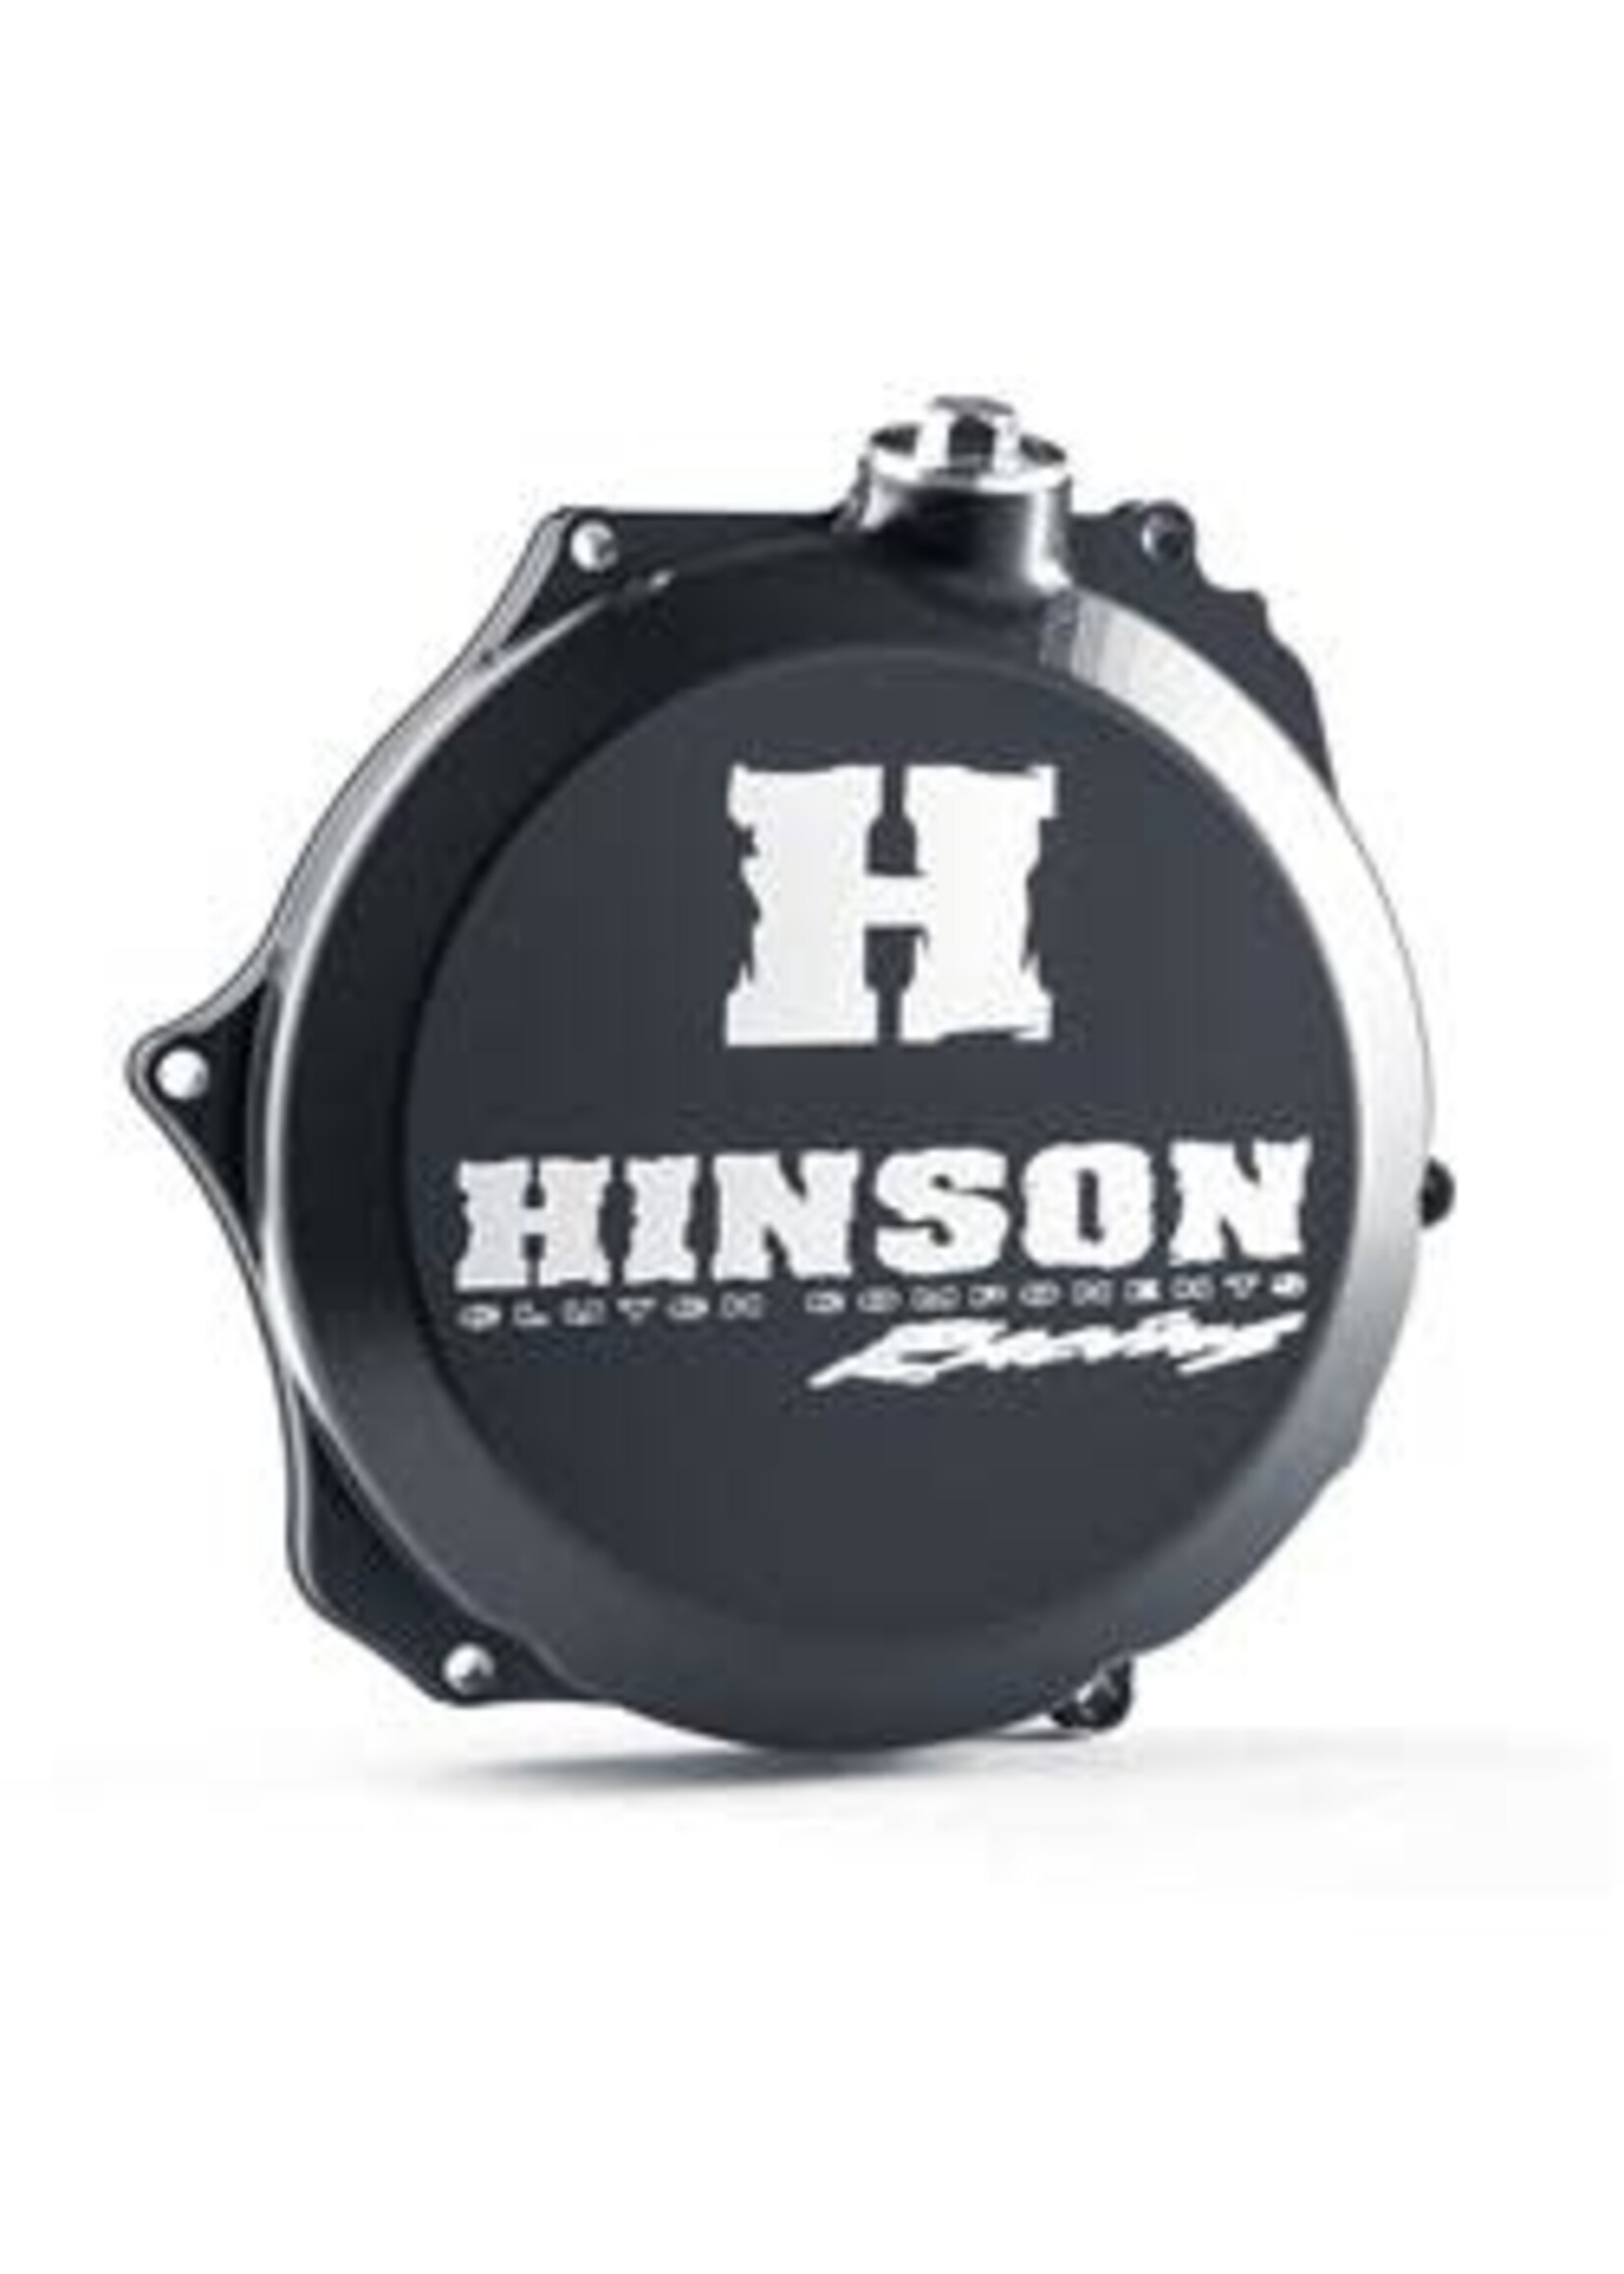 HINSON HINSON CLUTCH COVER C263